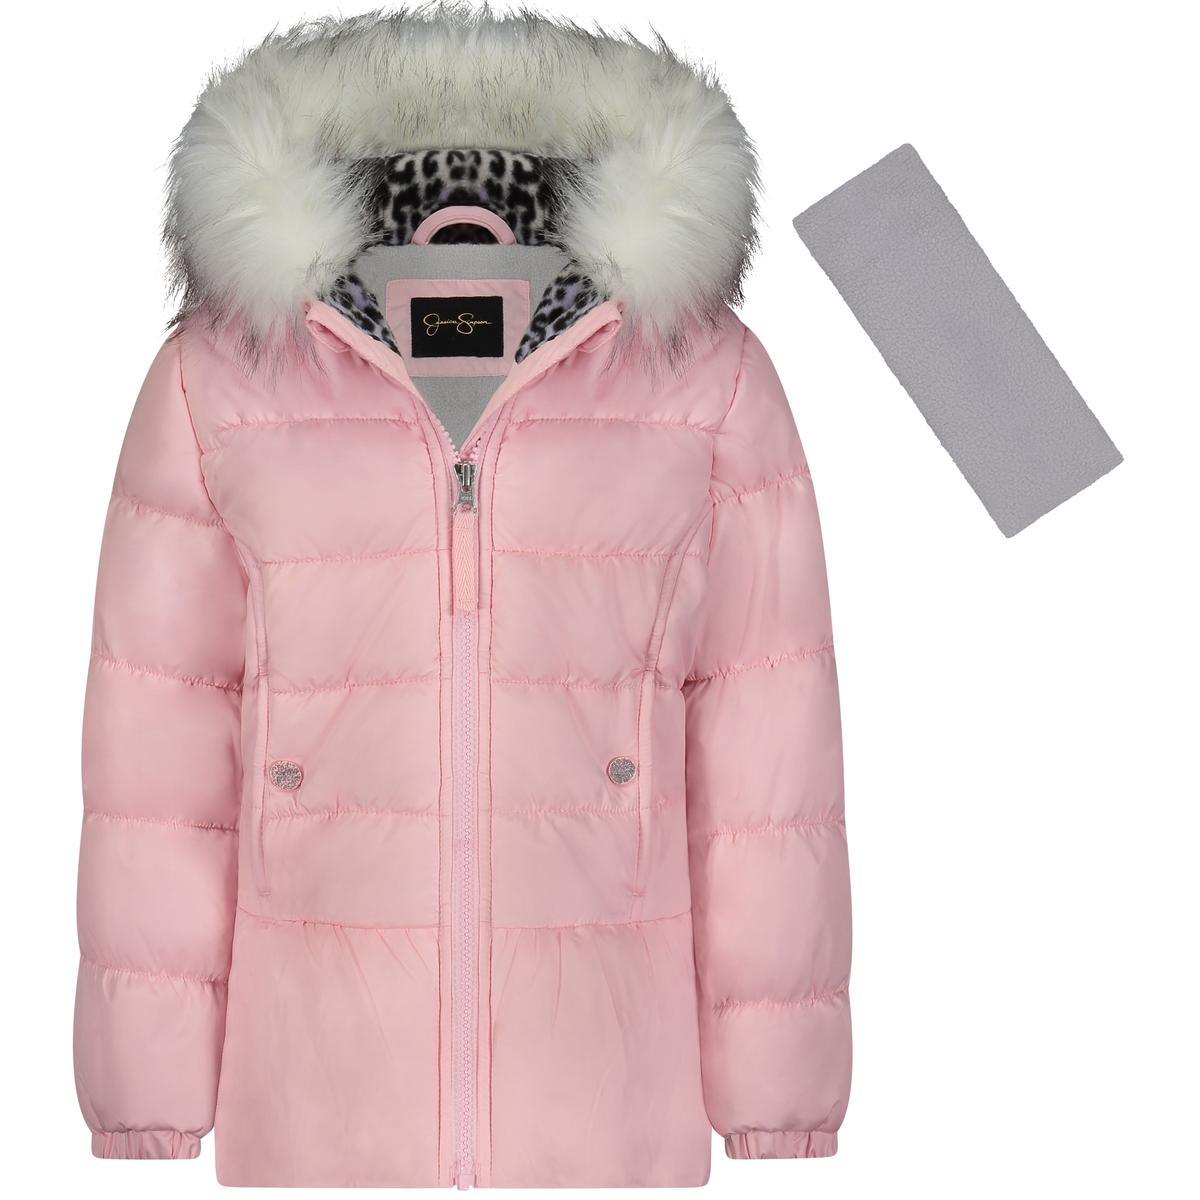 Jessica Simpson Girls Little Girls Faux Fur Puffer Jacket